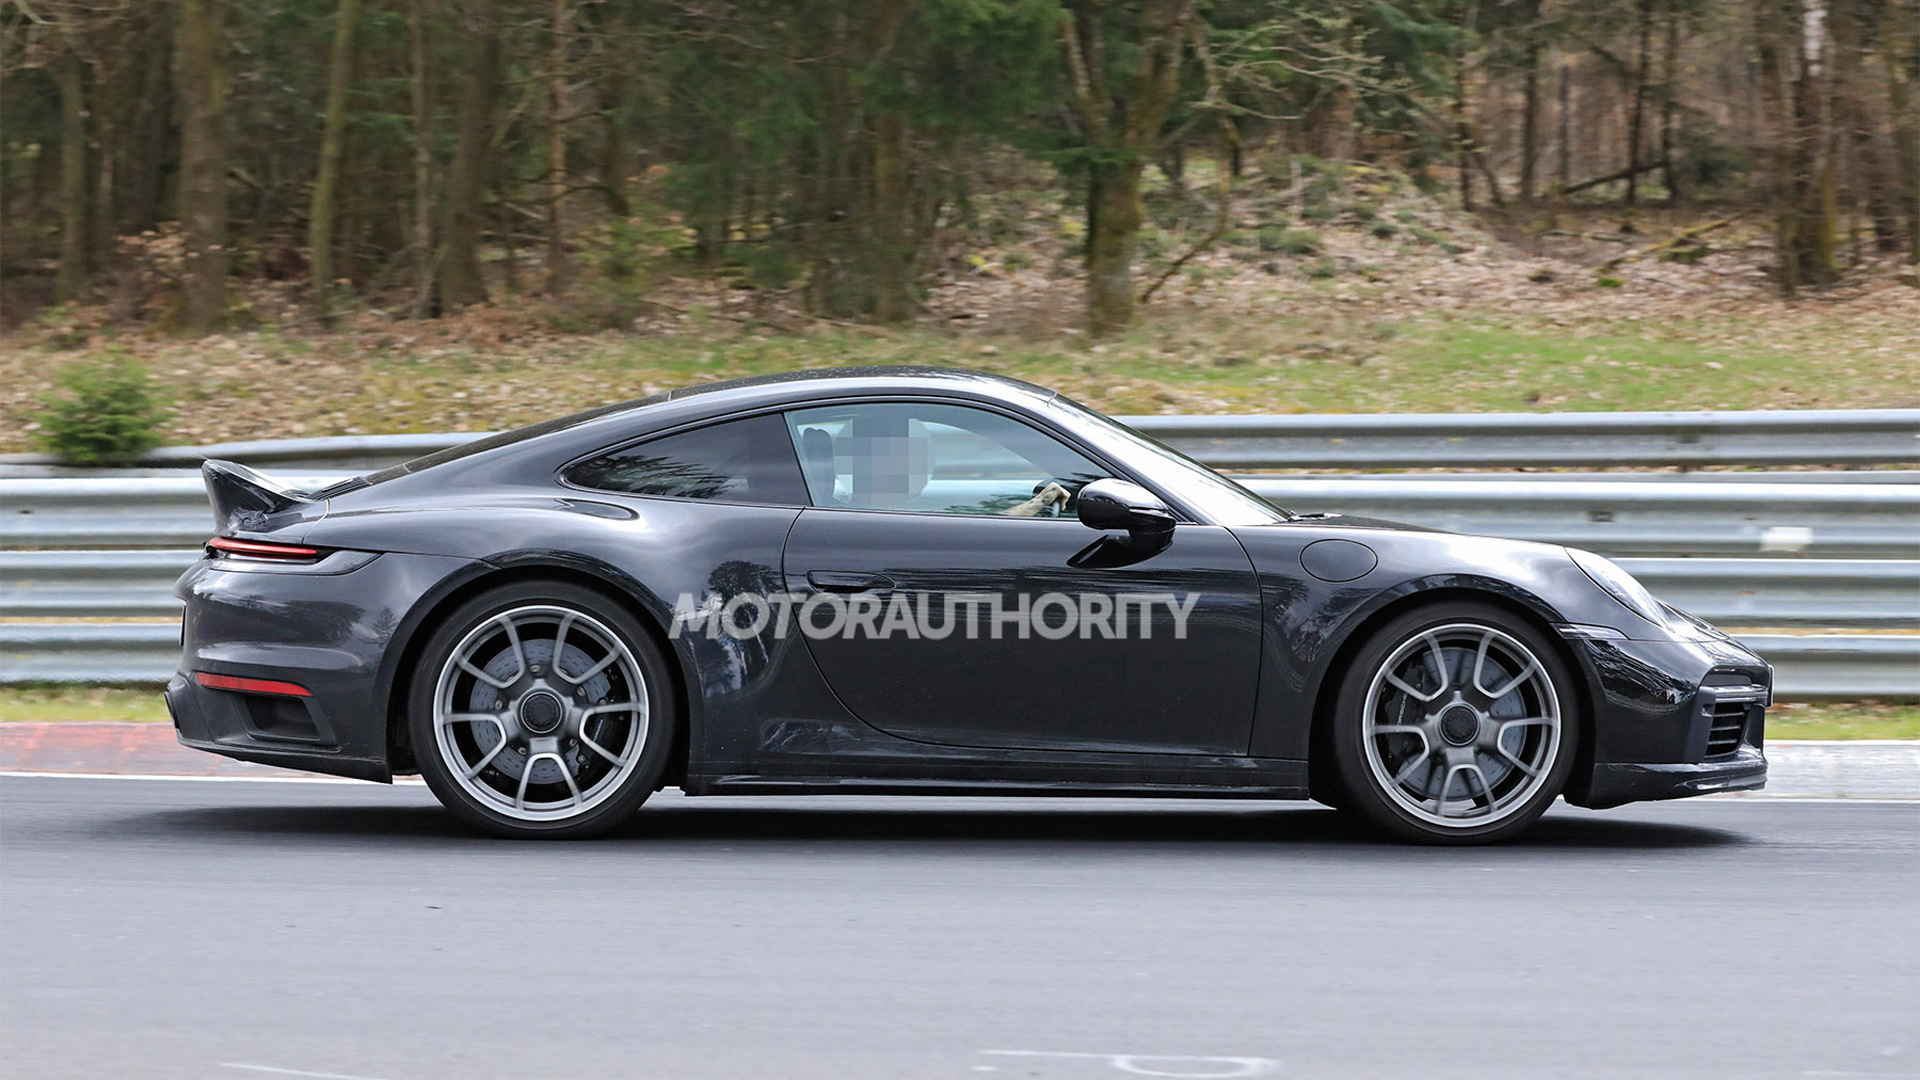 2022 Porsche 911 Sport Classic spy shots - Photo credit: S. Baldauf/SB-Medien